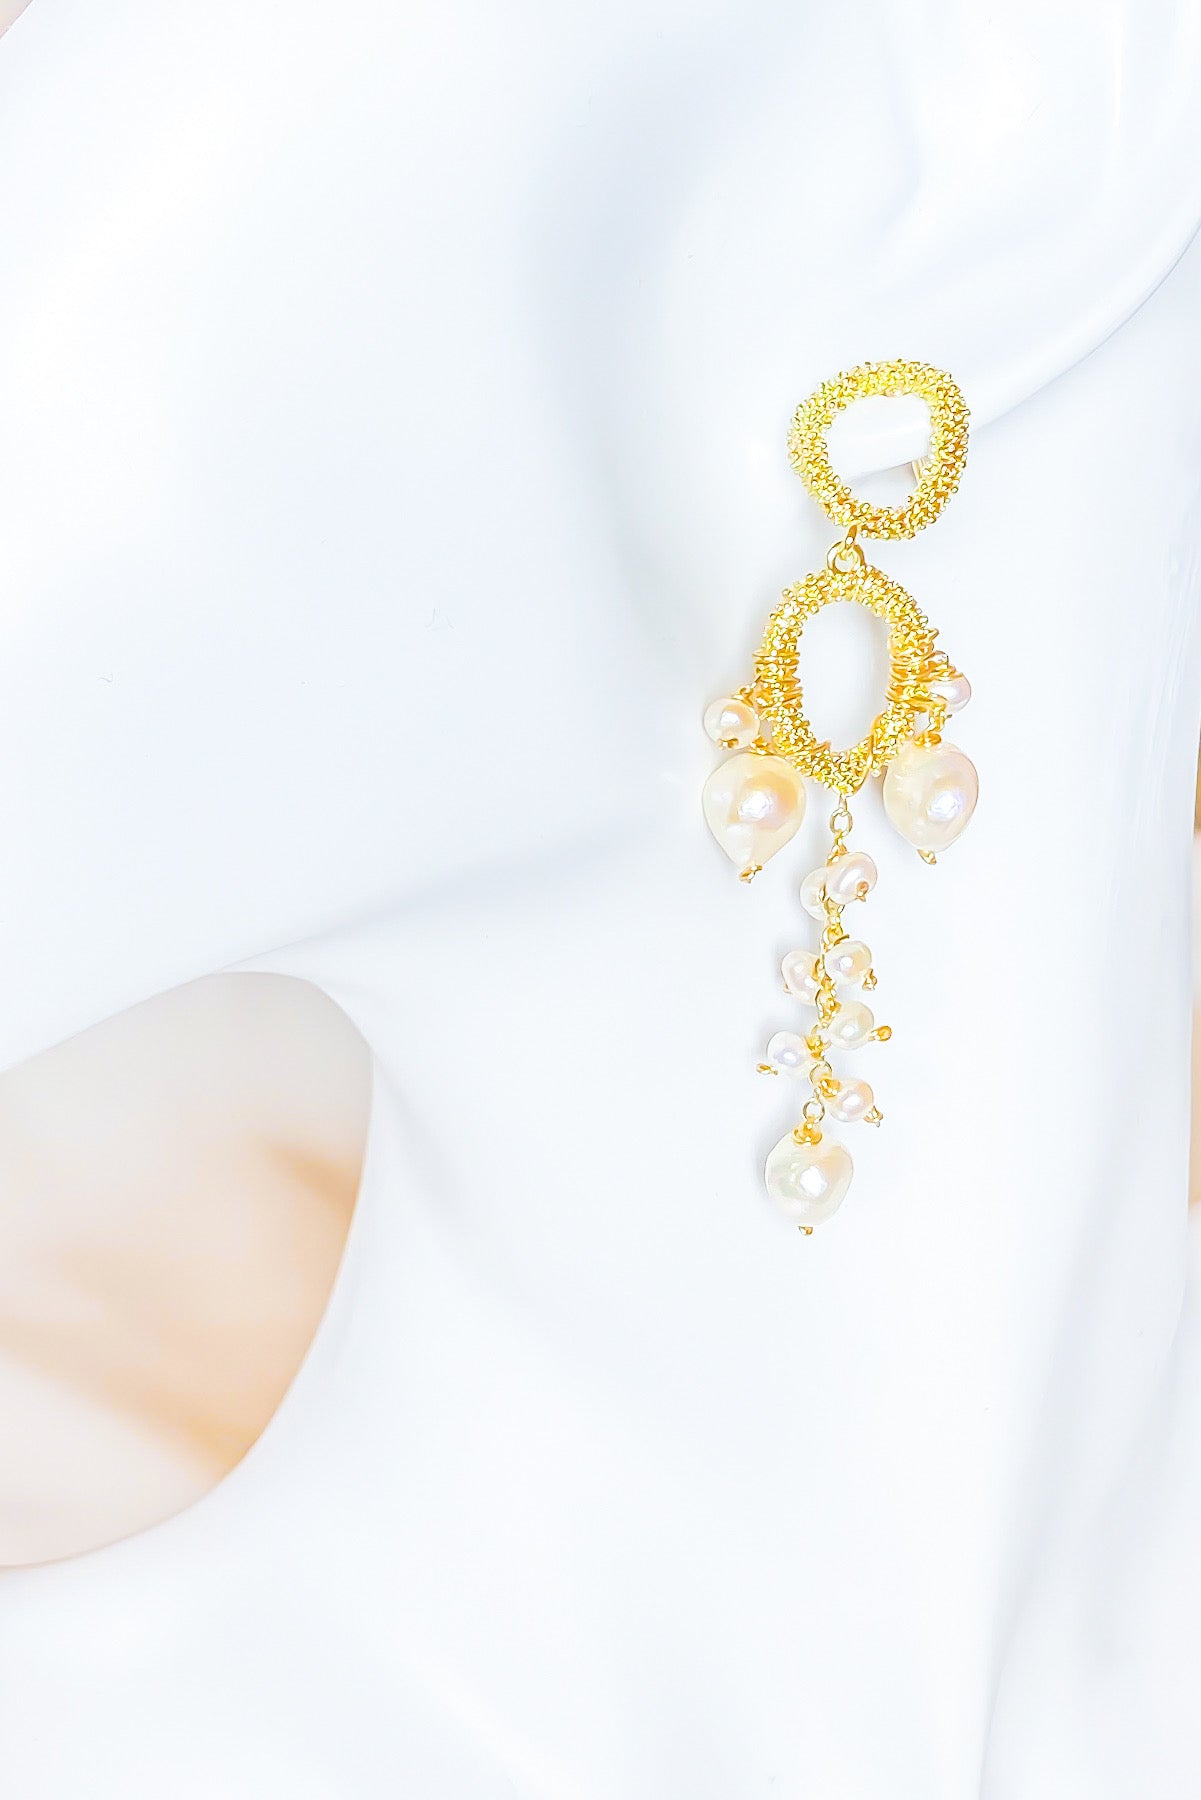 SKYE San Francisco Shop SF Chic Modern Elegant Classy Women Jewelry French Parisian Minimalist Liana 18K Gold Freshwater Pearl Earrings 6